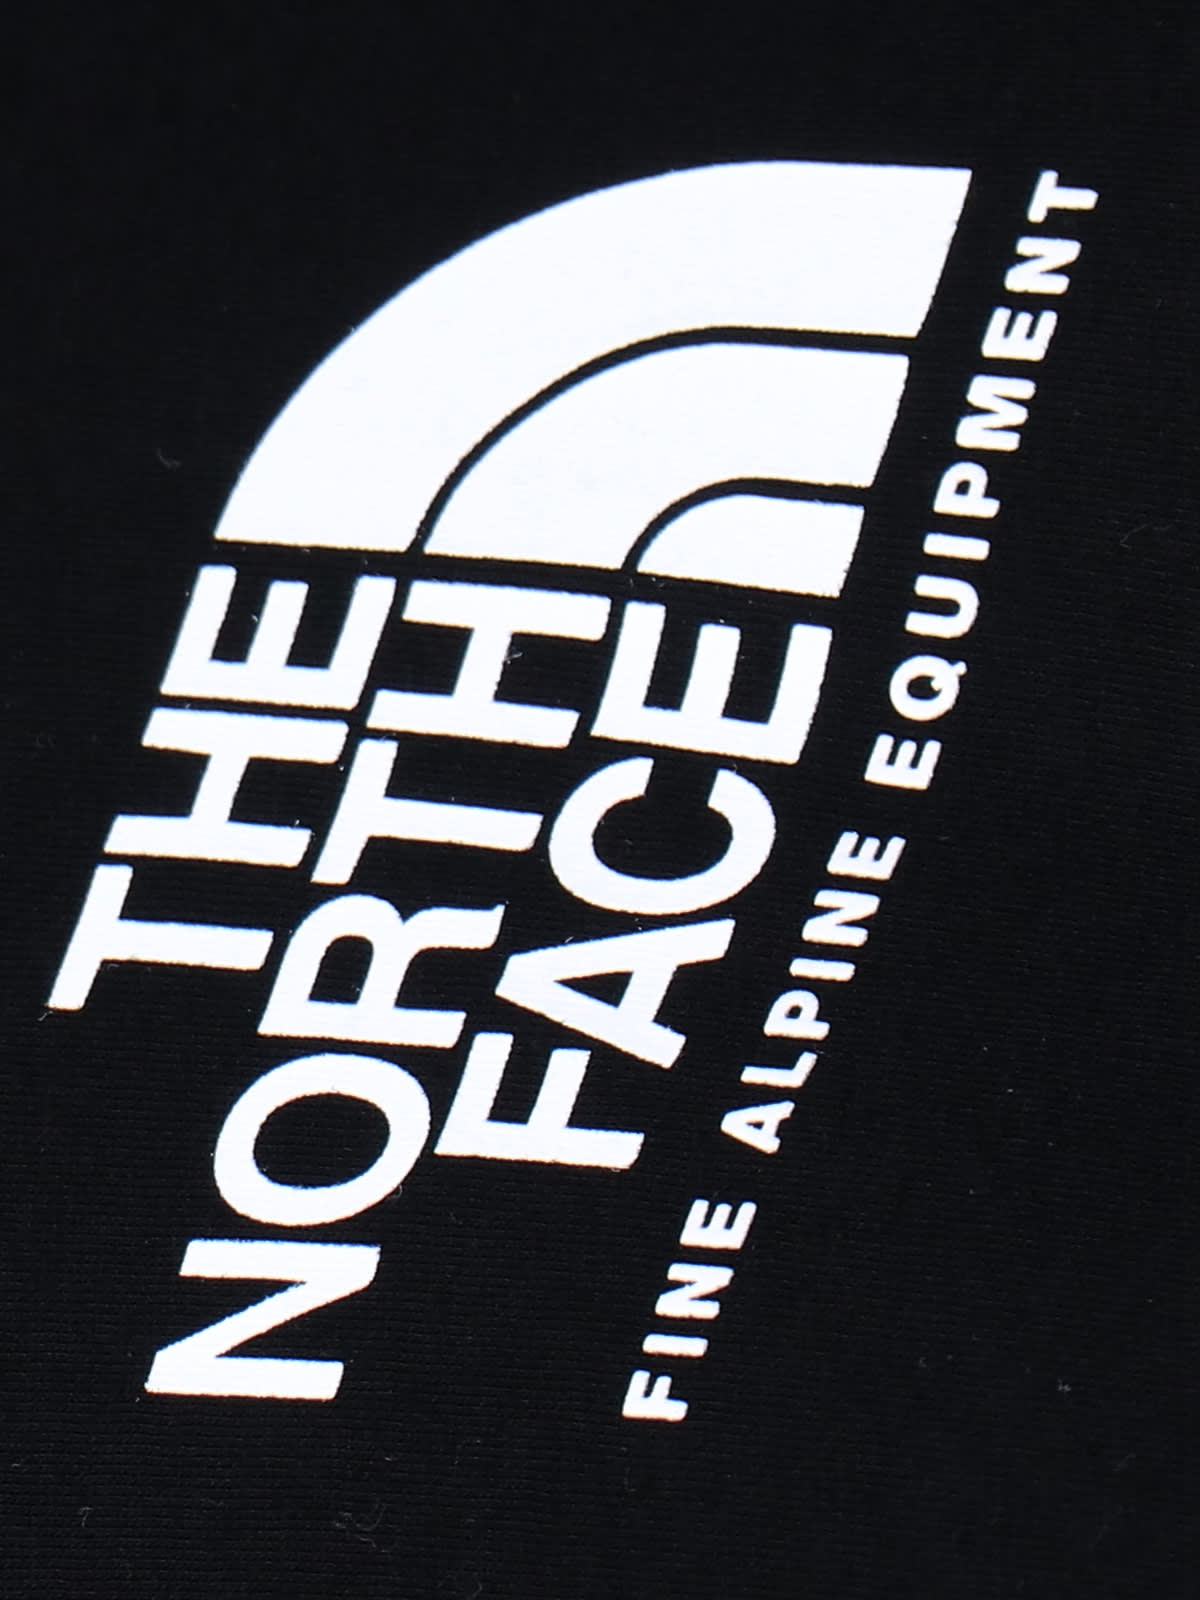 Shop The North Face Fine Alpine Equipment T-shirt In Black